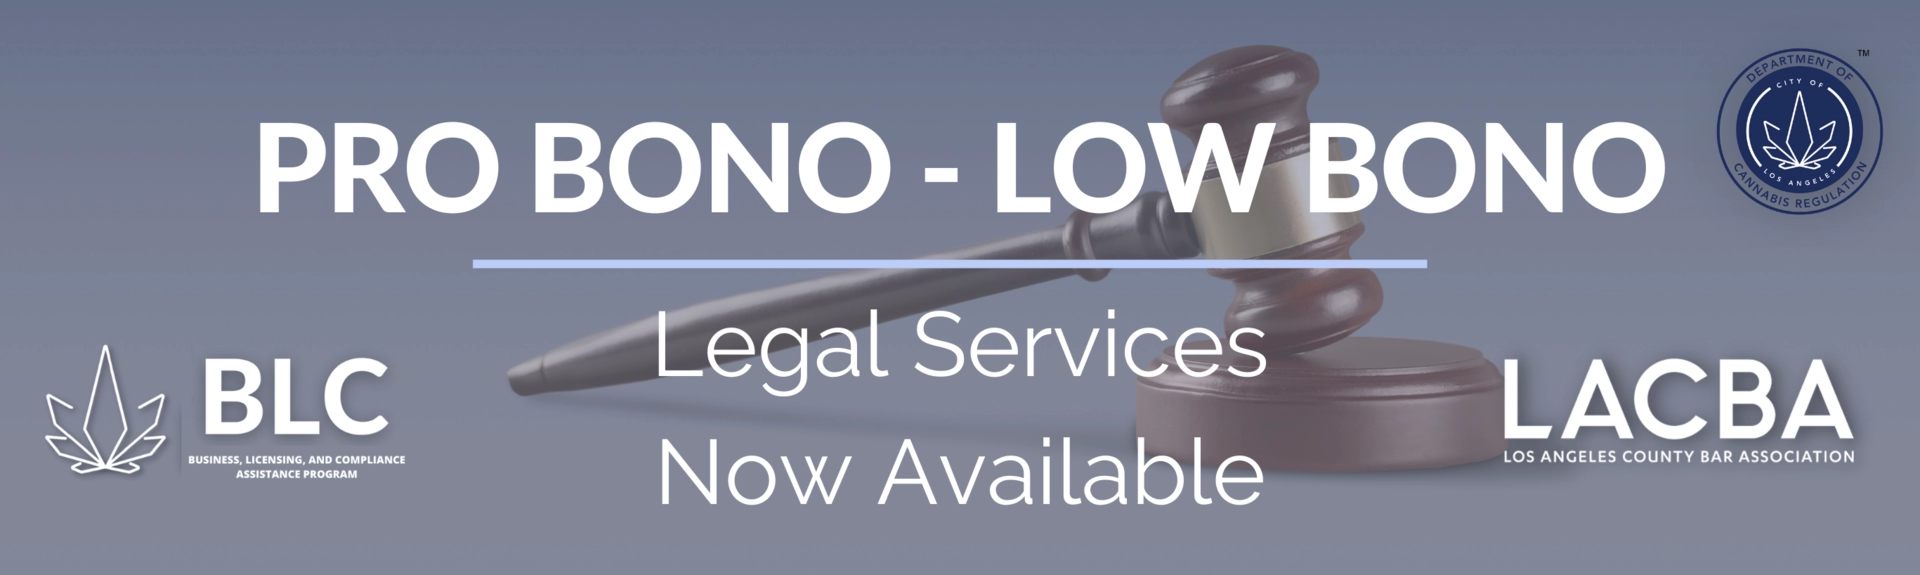 Pro Bono - Low Bono Legal Services Now Available